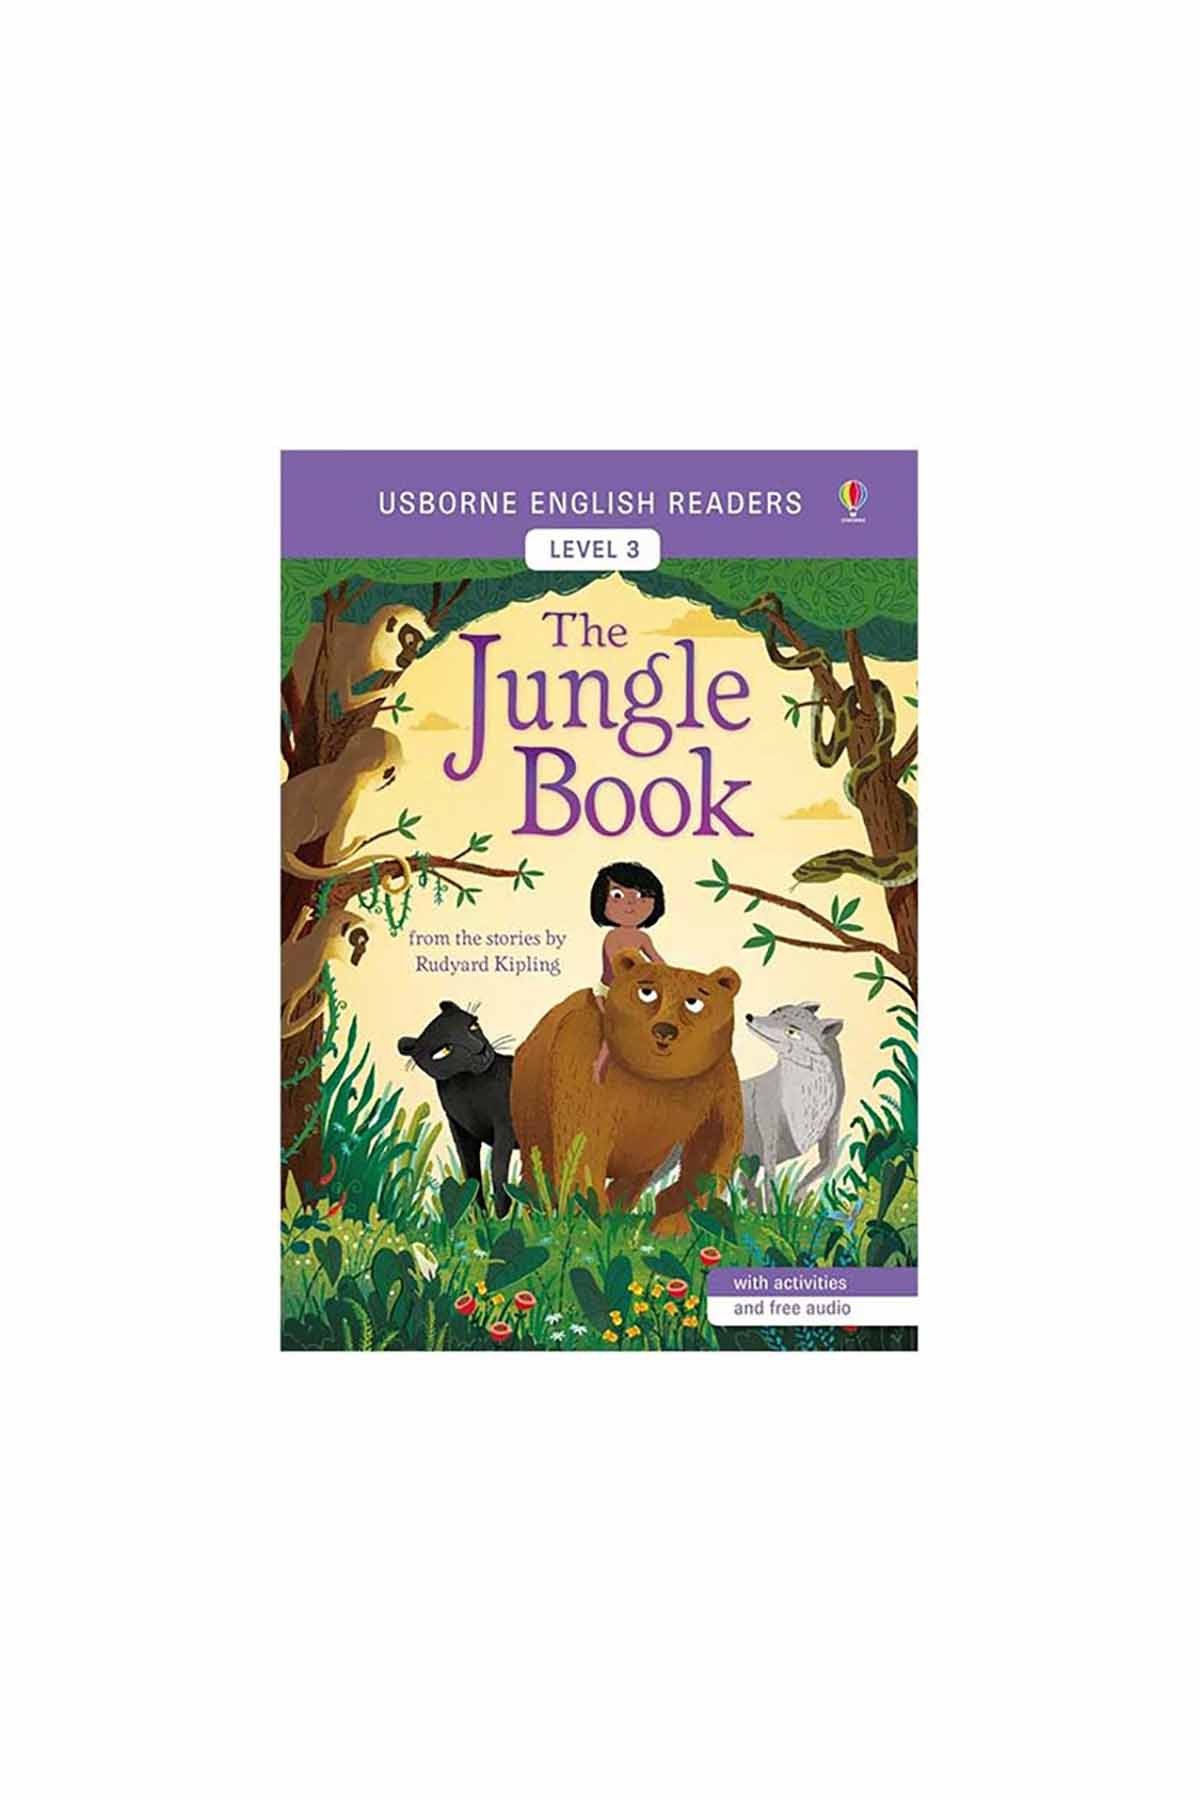 The Usborne The Jungle Book